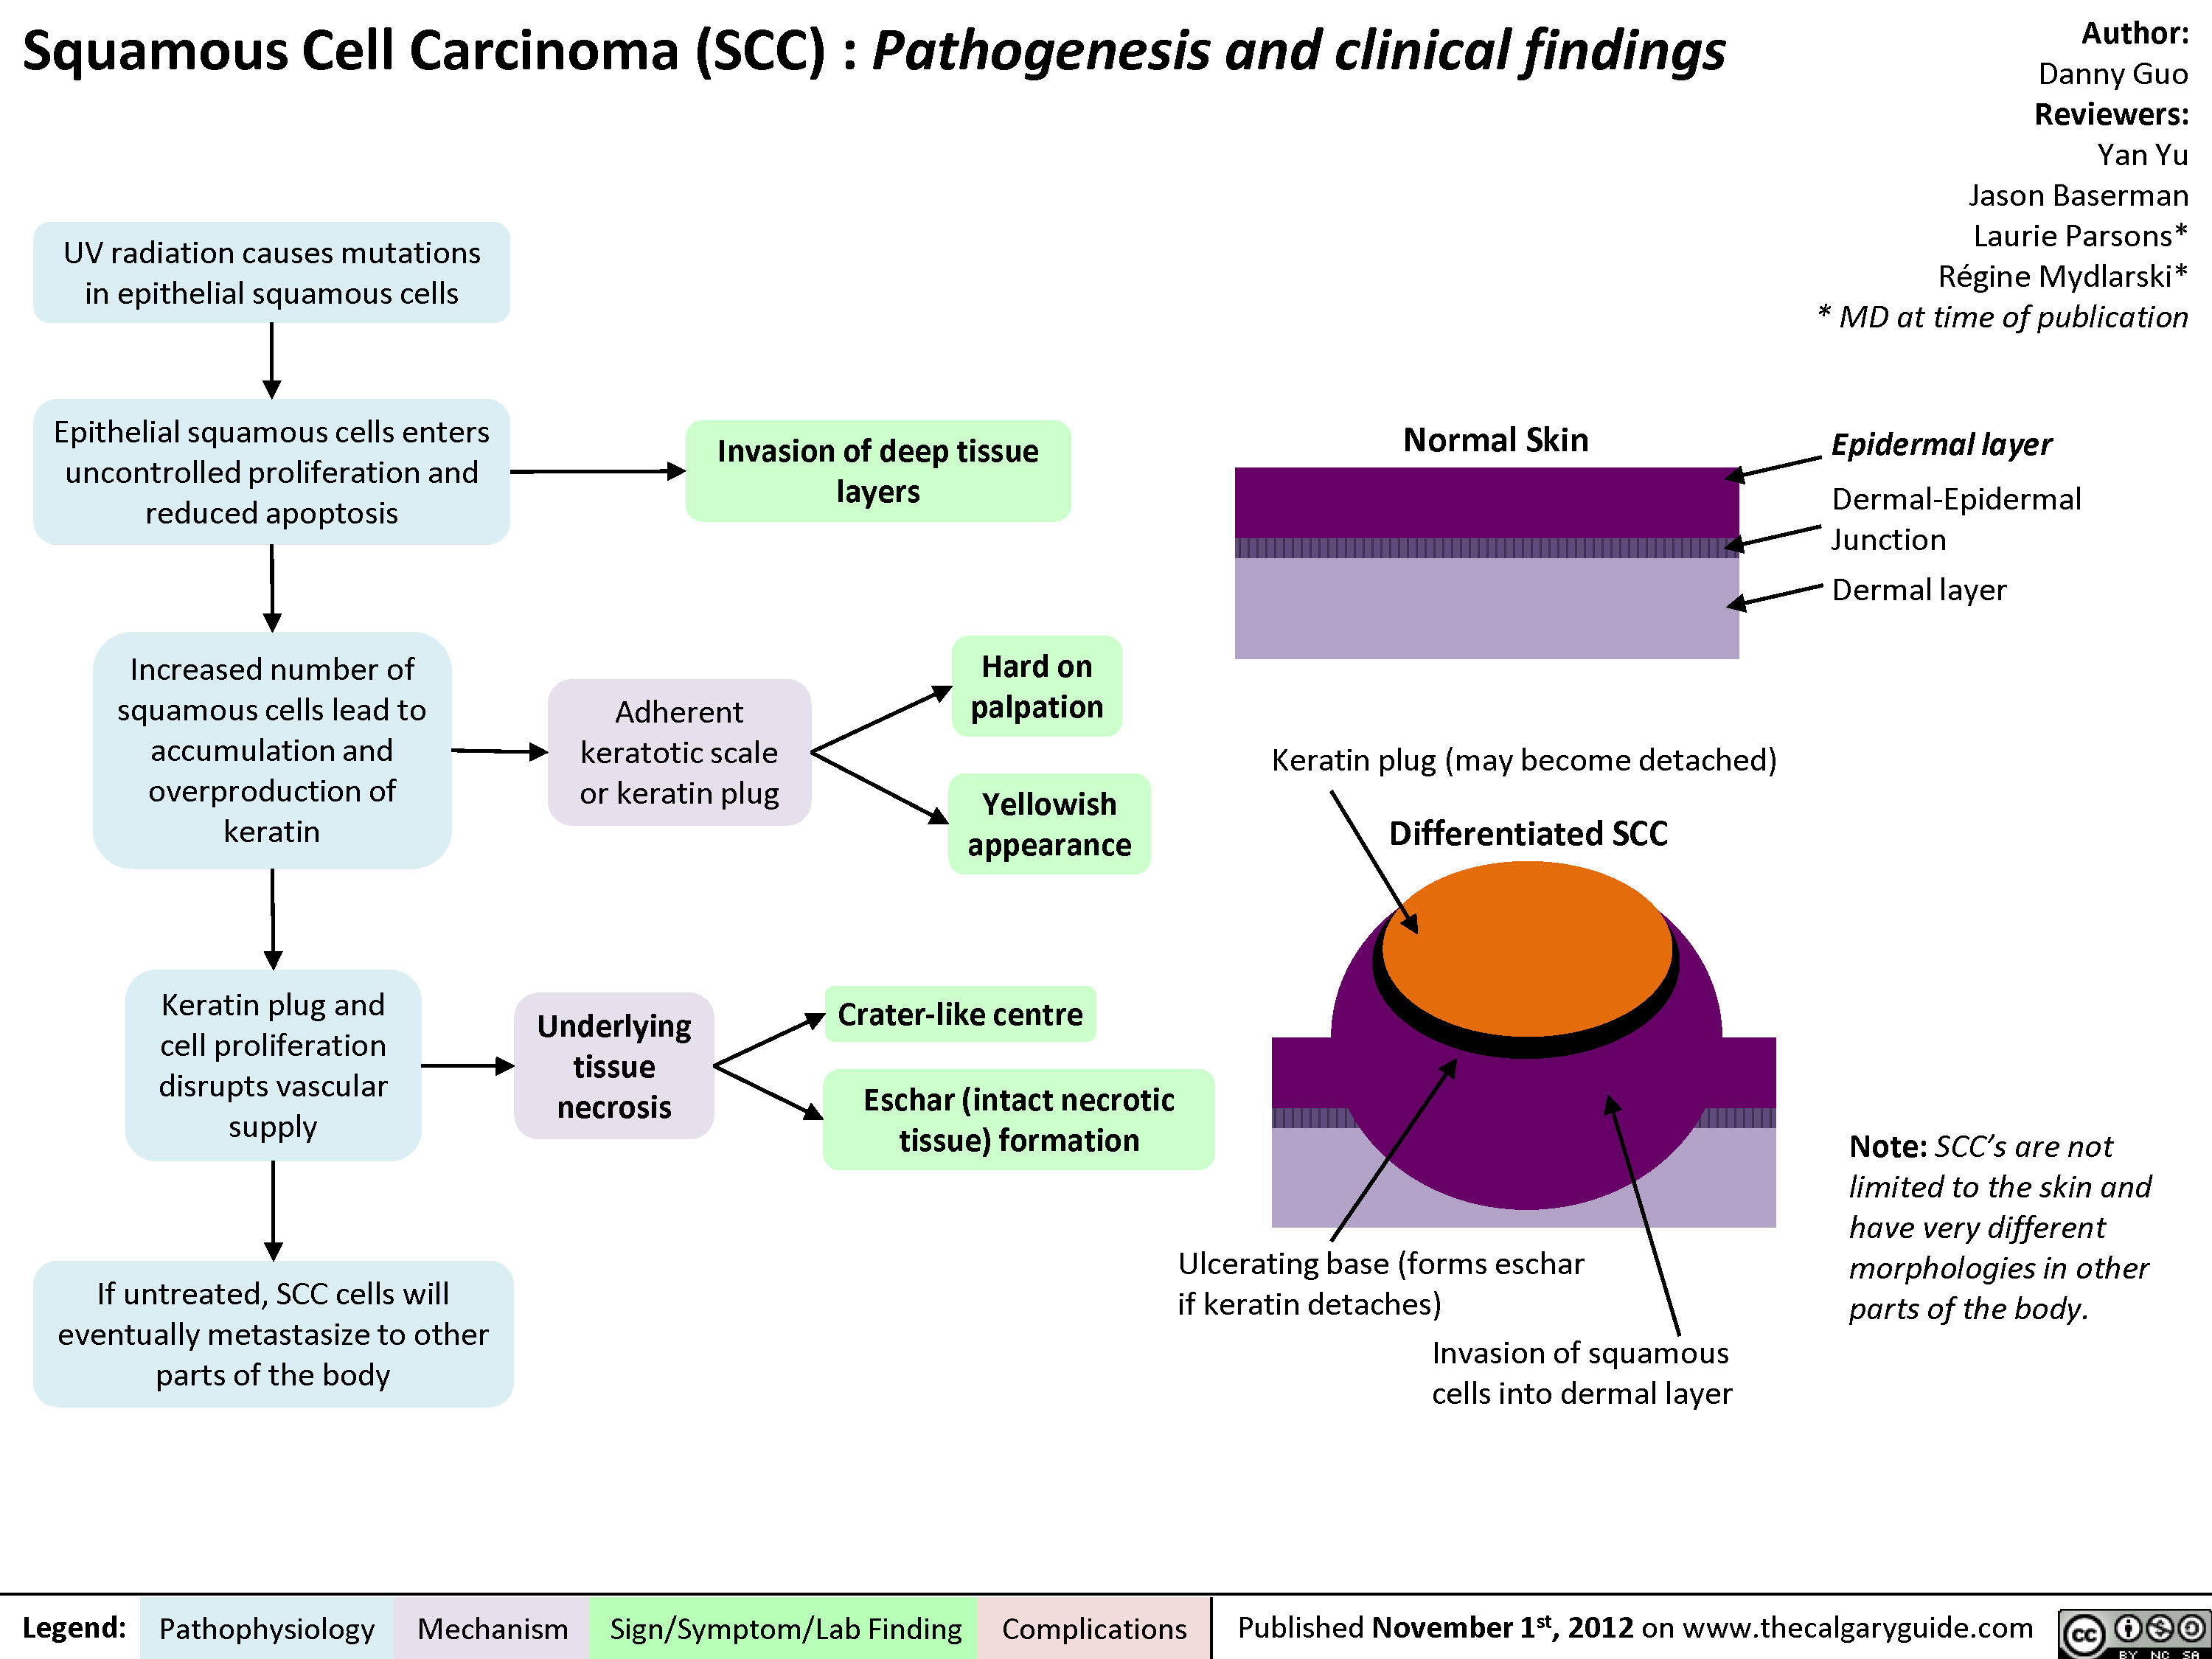 Squamous Cell Carcinoma (SCC)